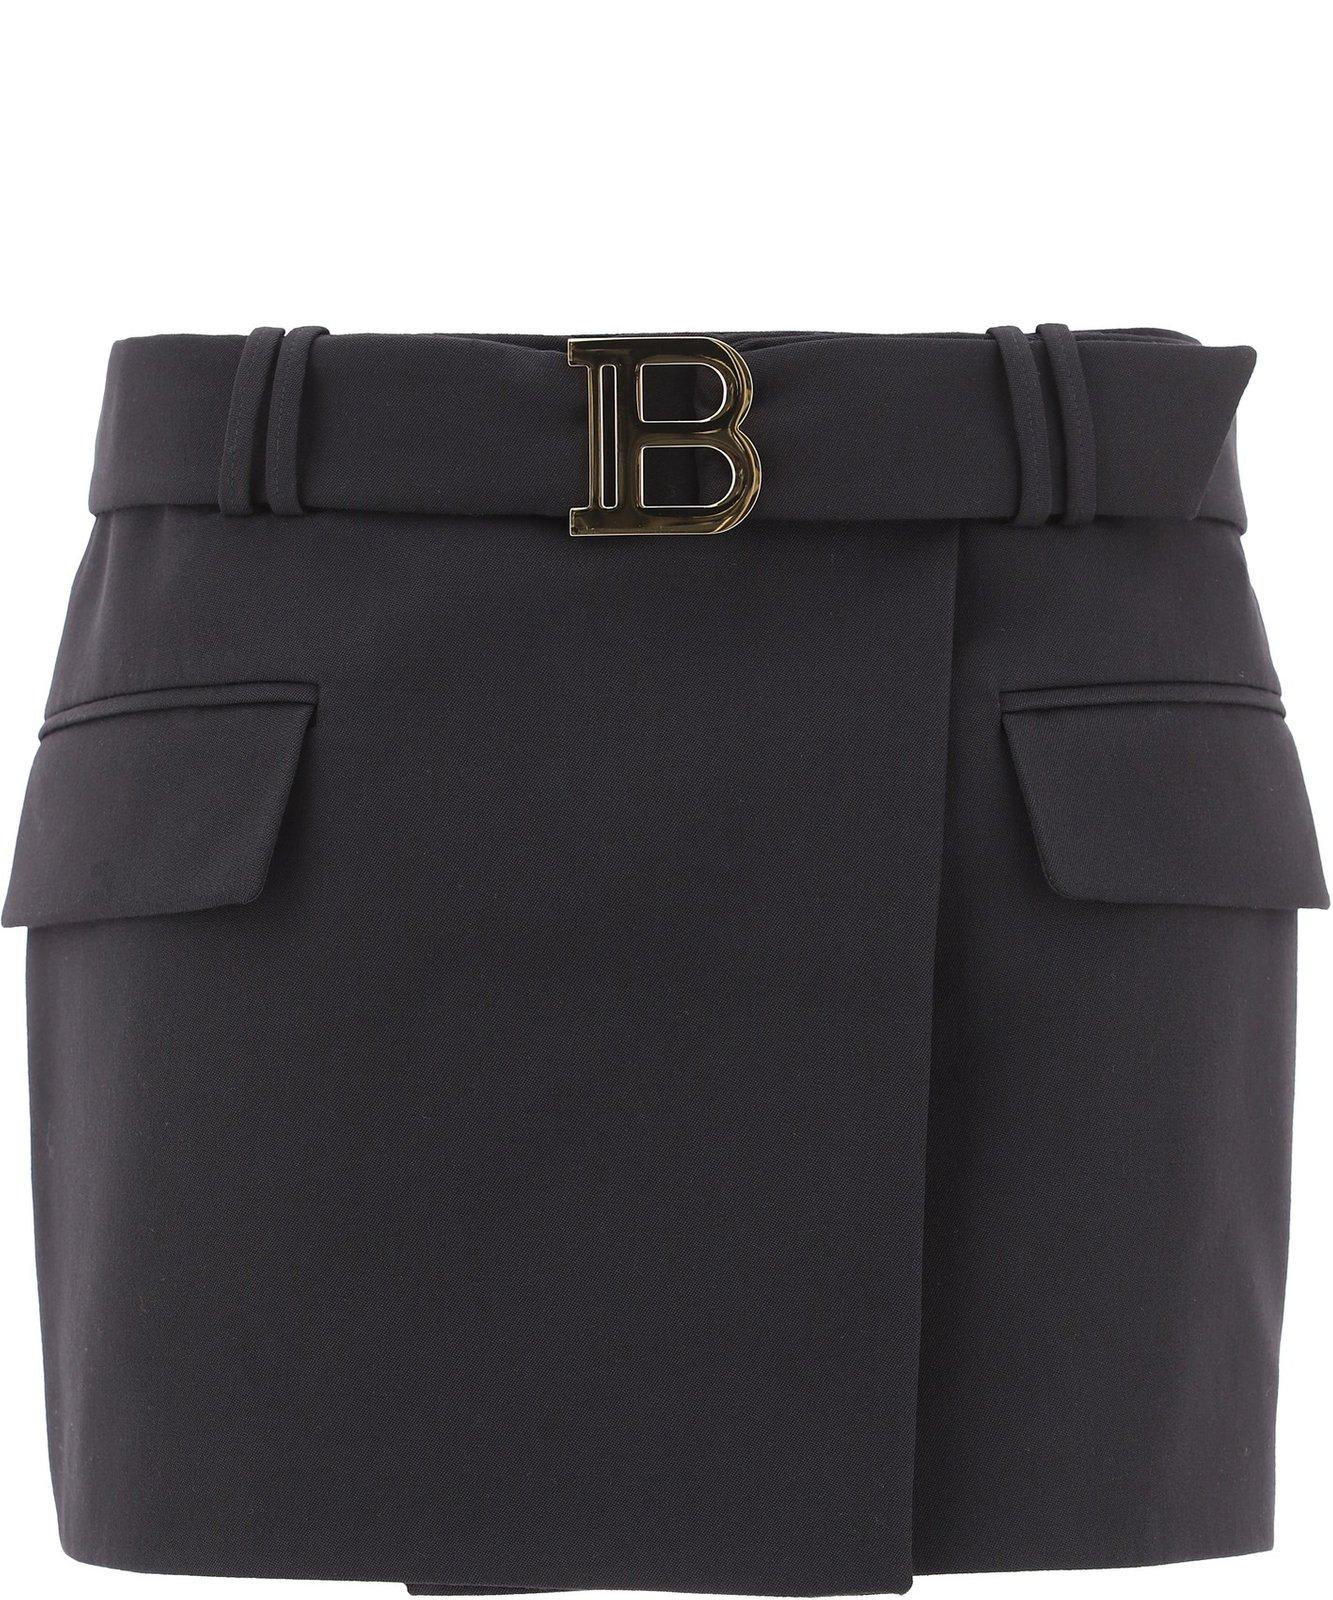 B Buckle Belted Mini Skirt